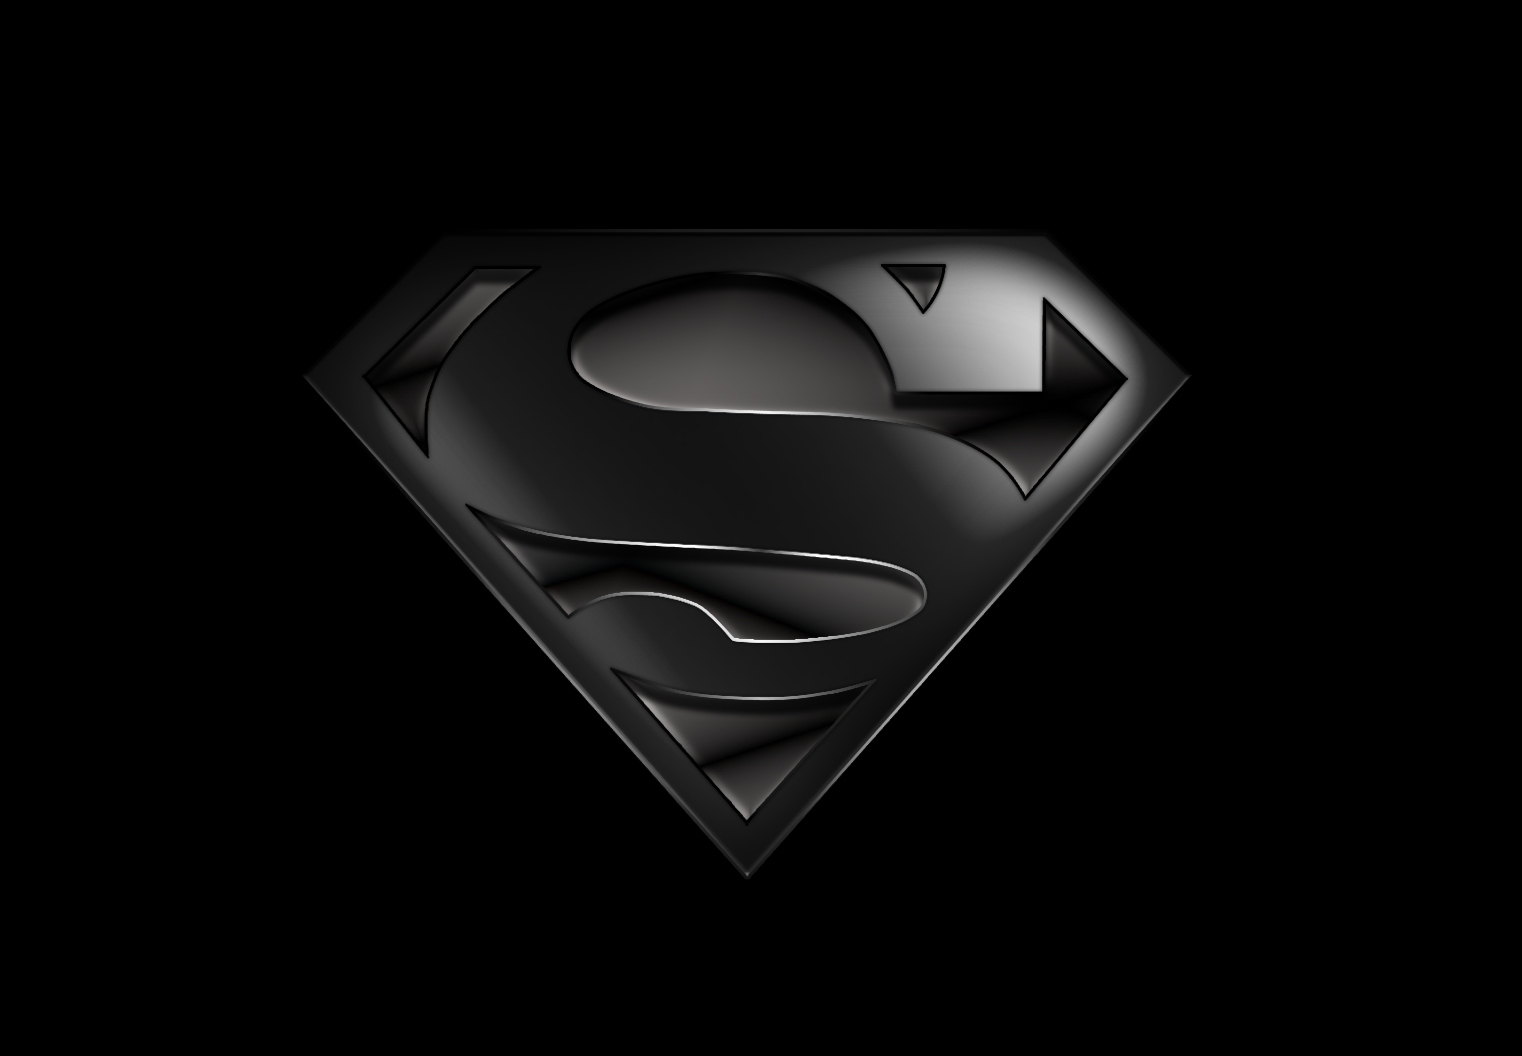 Superman Logo Black